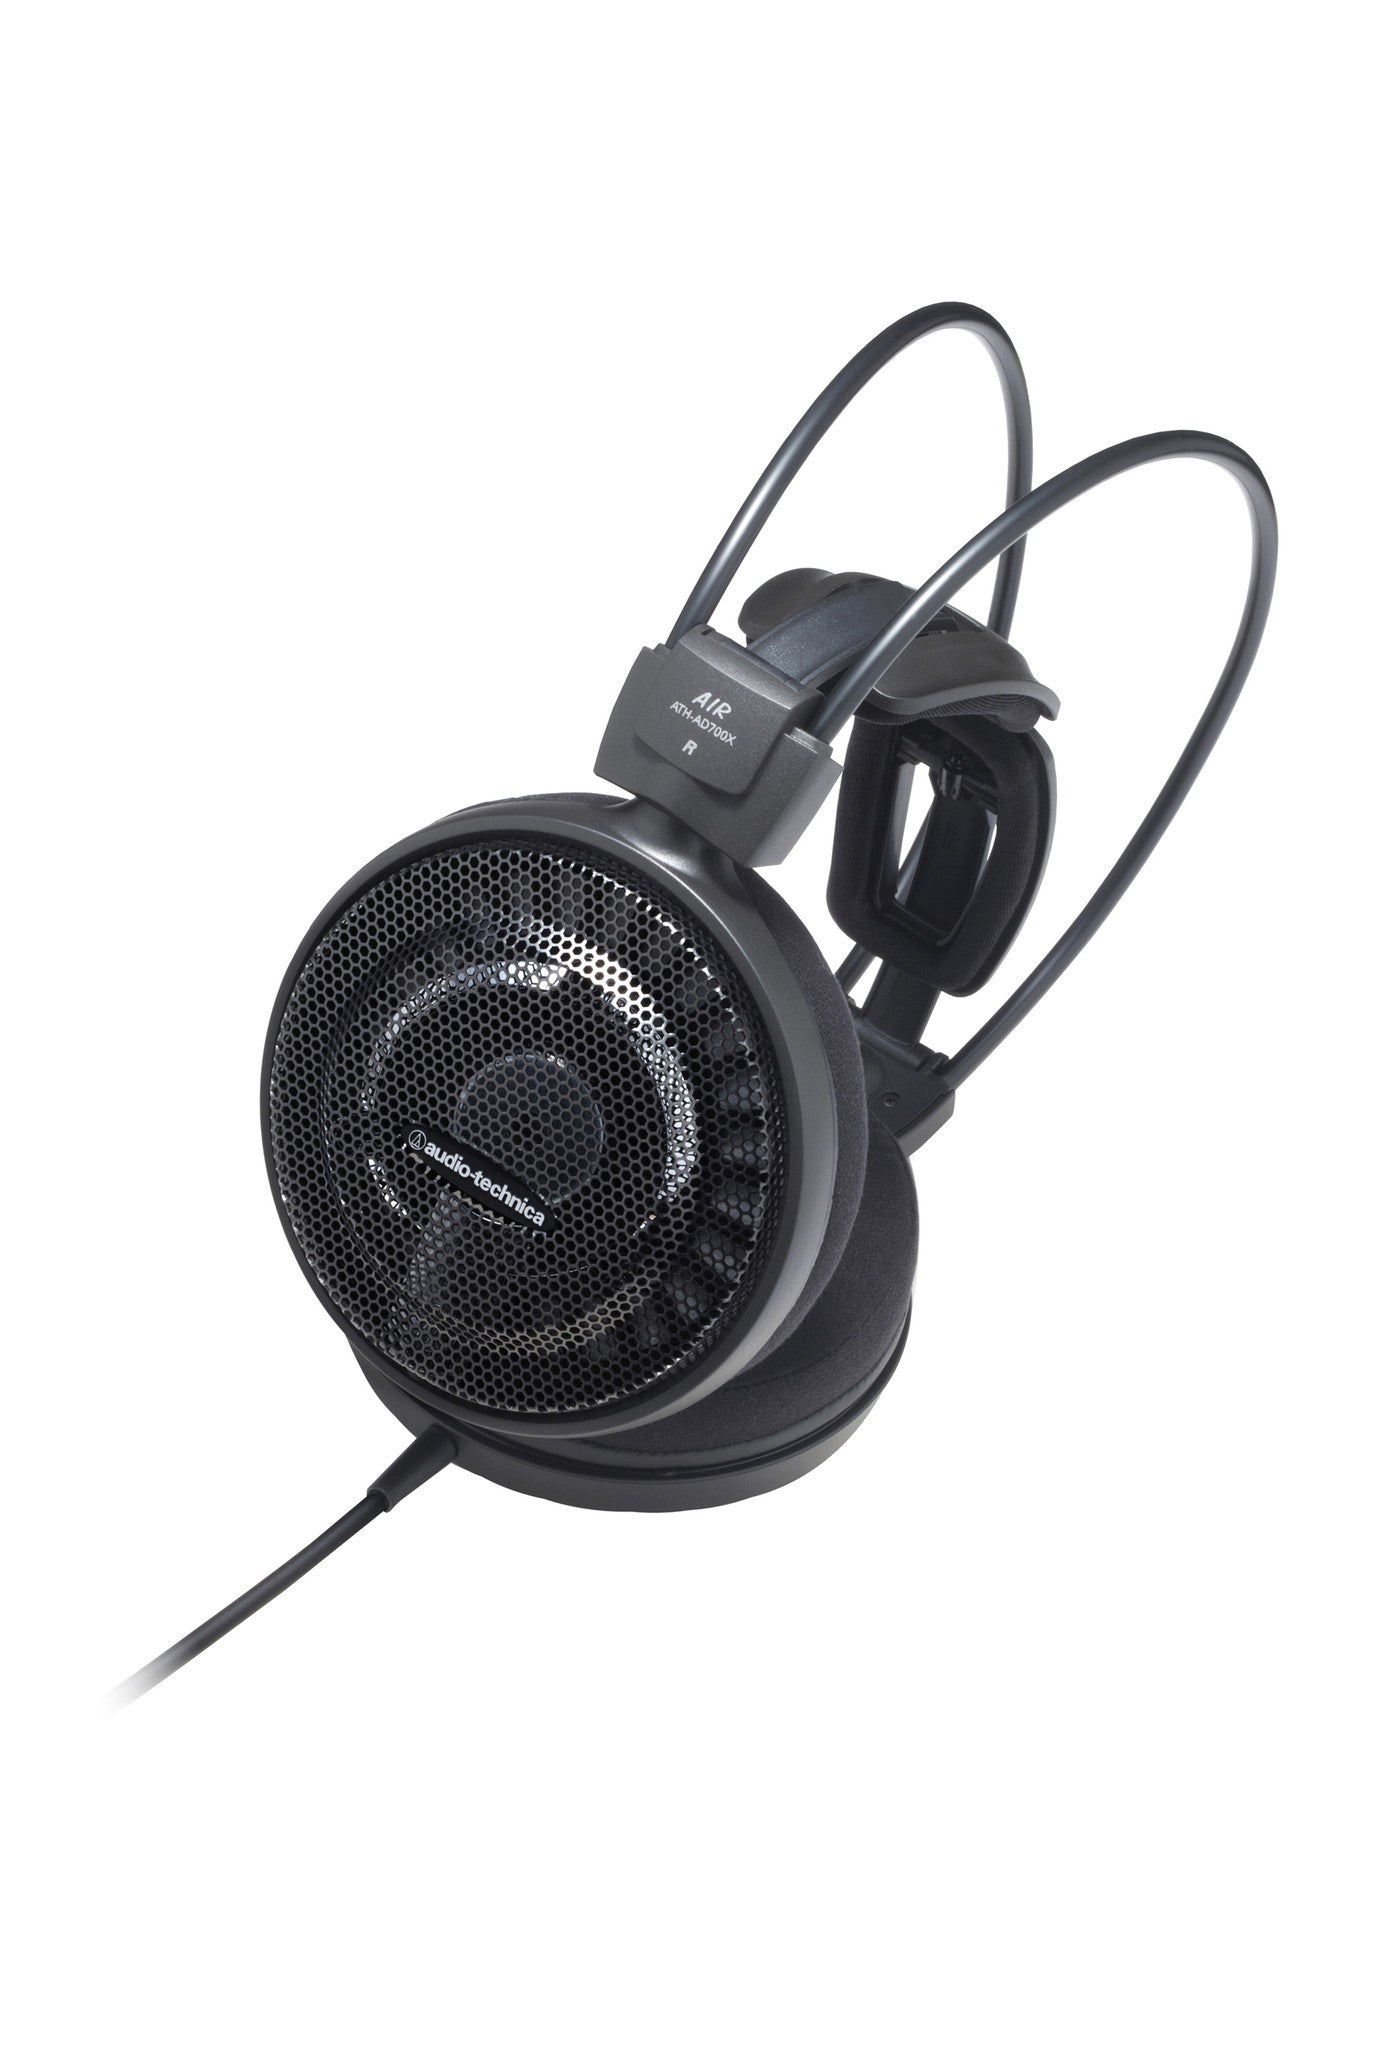 Audio Technica ATH-AD700X Audiophile Open-air Headphone